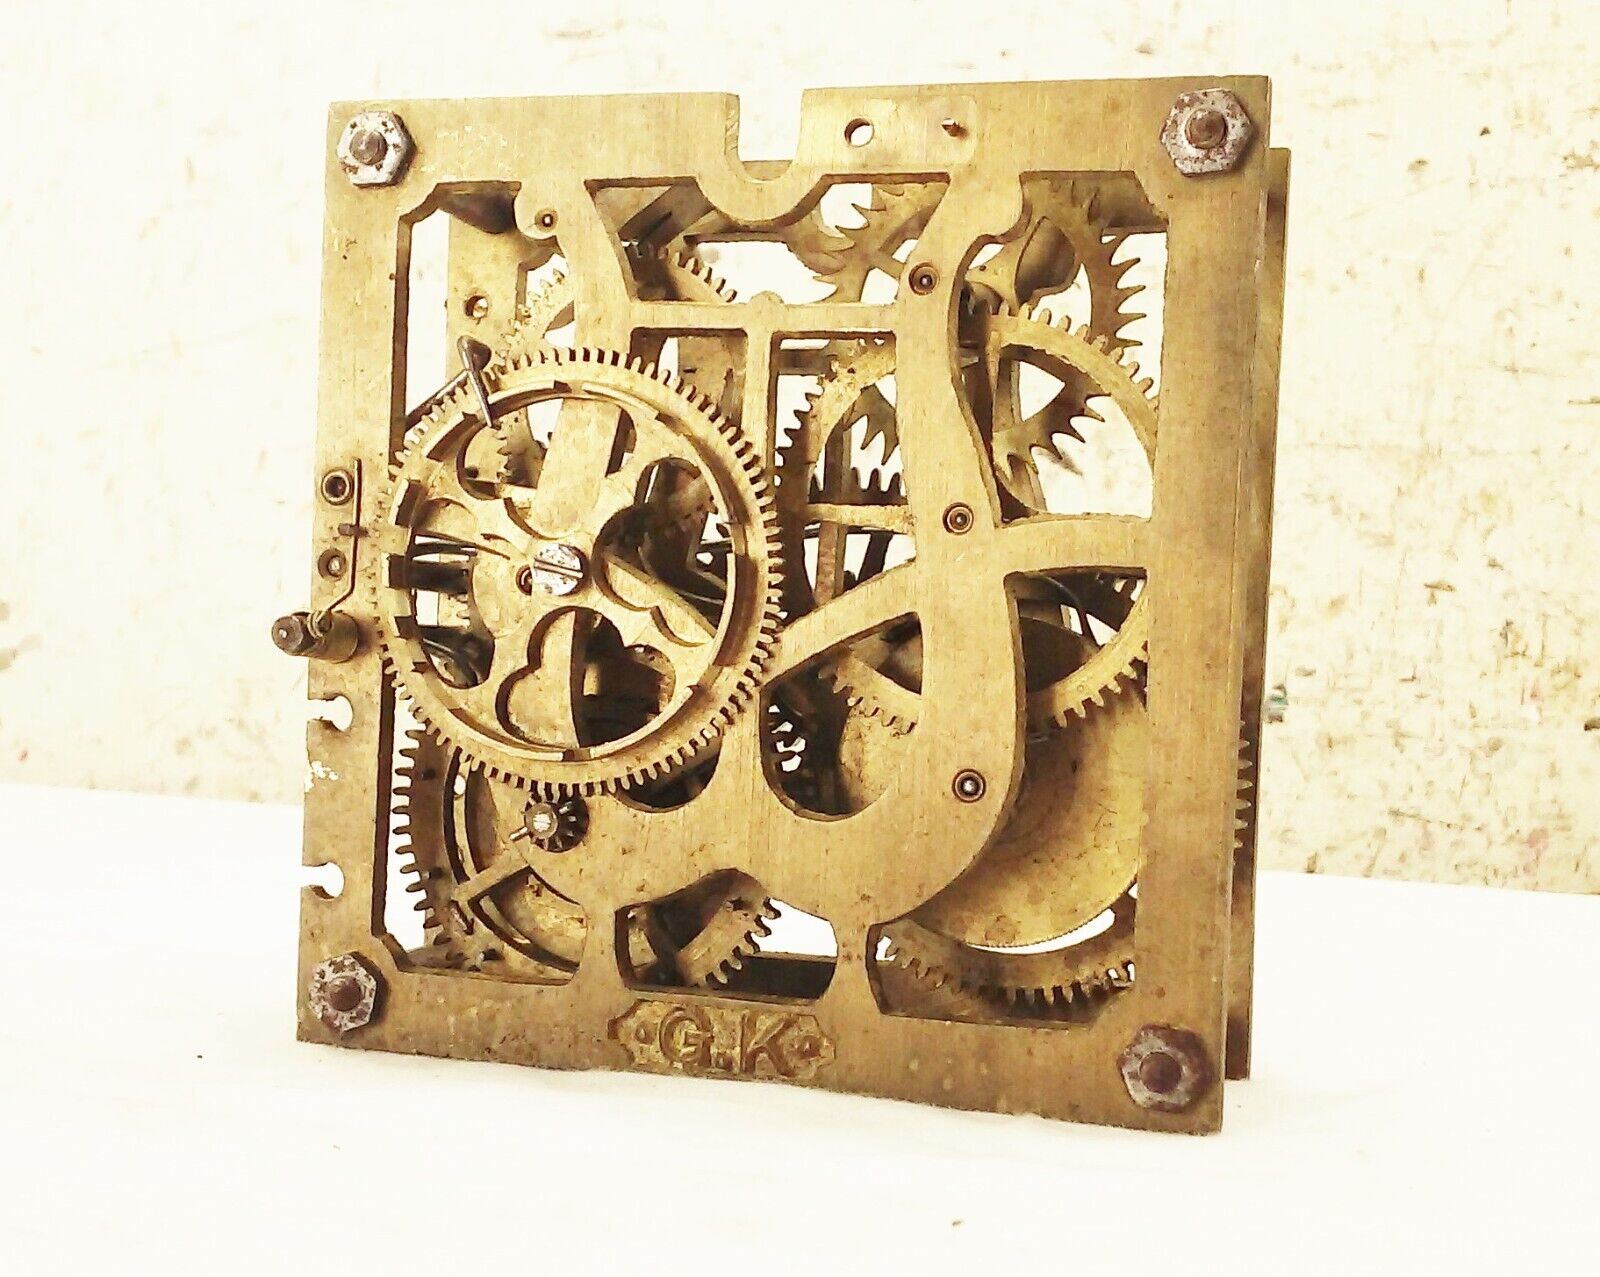 Vtg antique Brass wall clock movement gears sprockets industrial steampunk decor